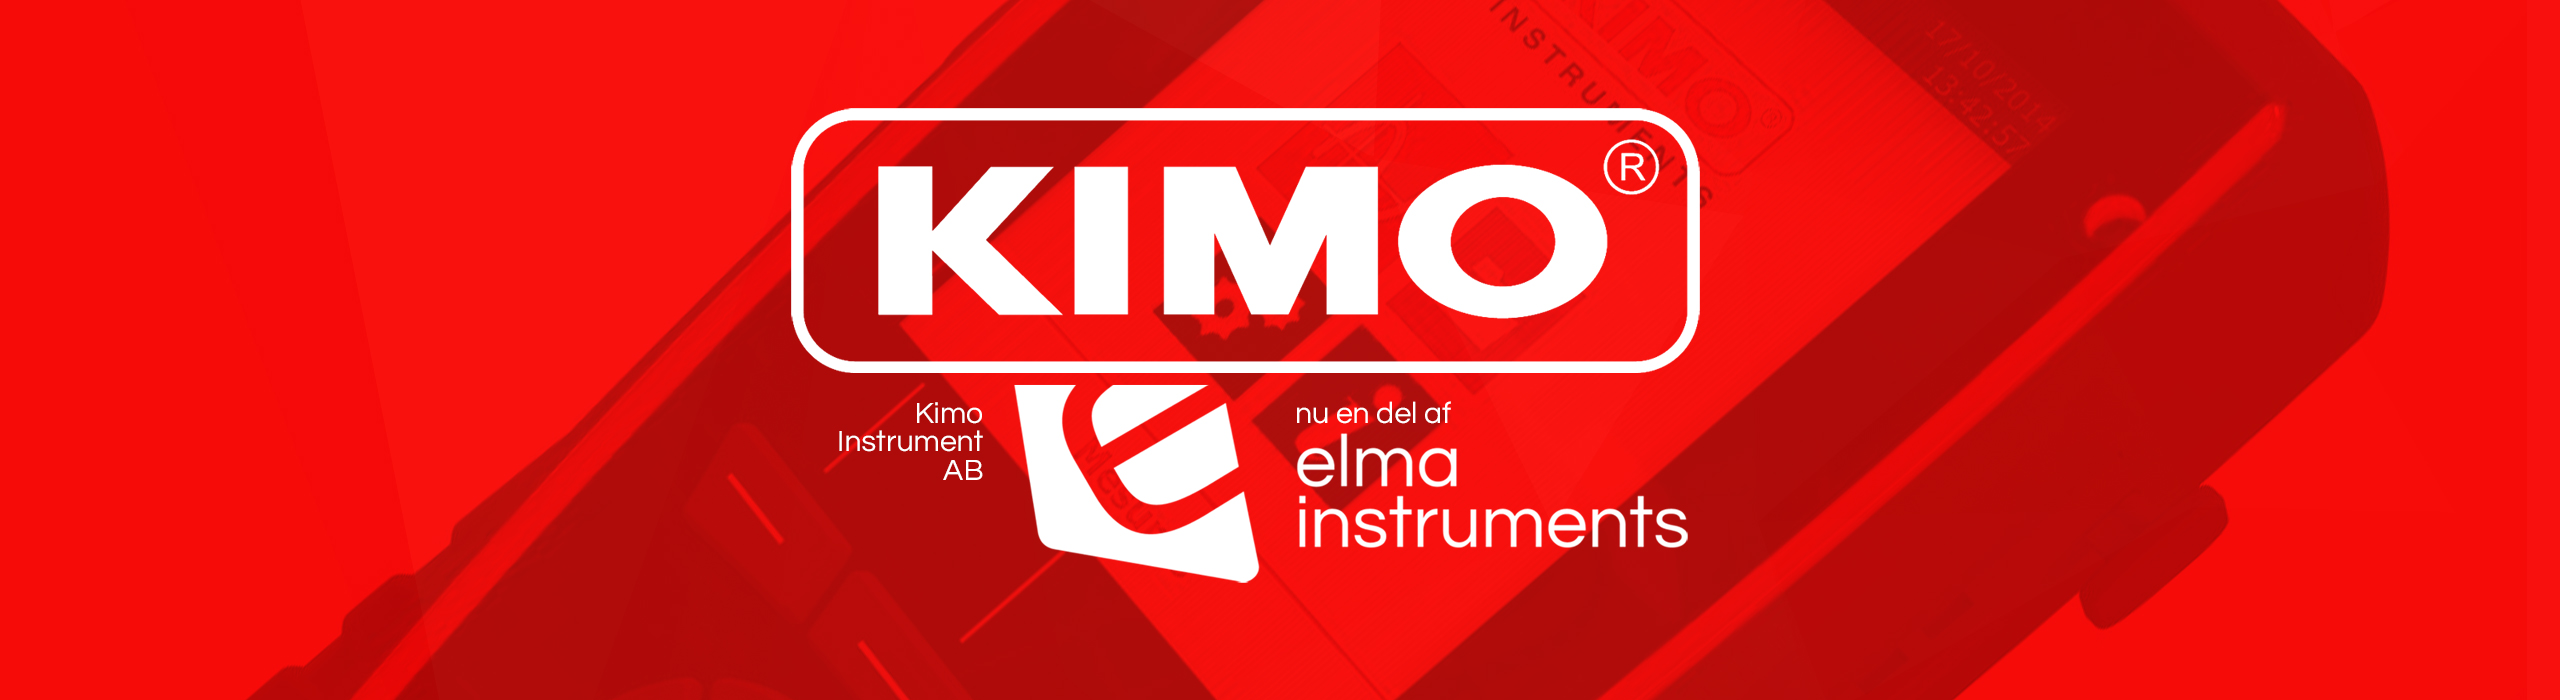 Elma Instruments overtager Kimo Instrument